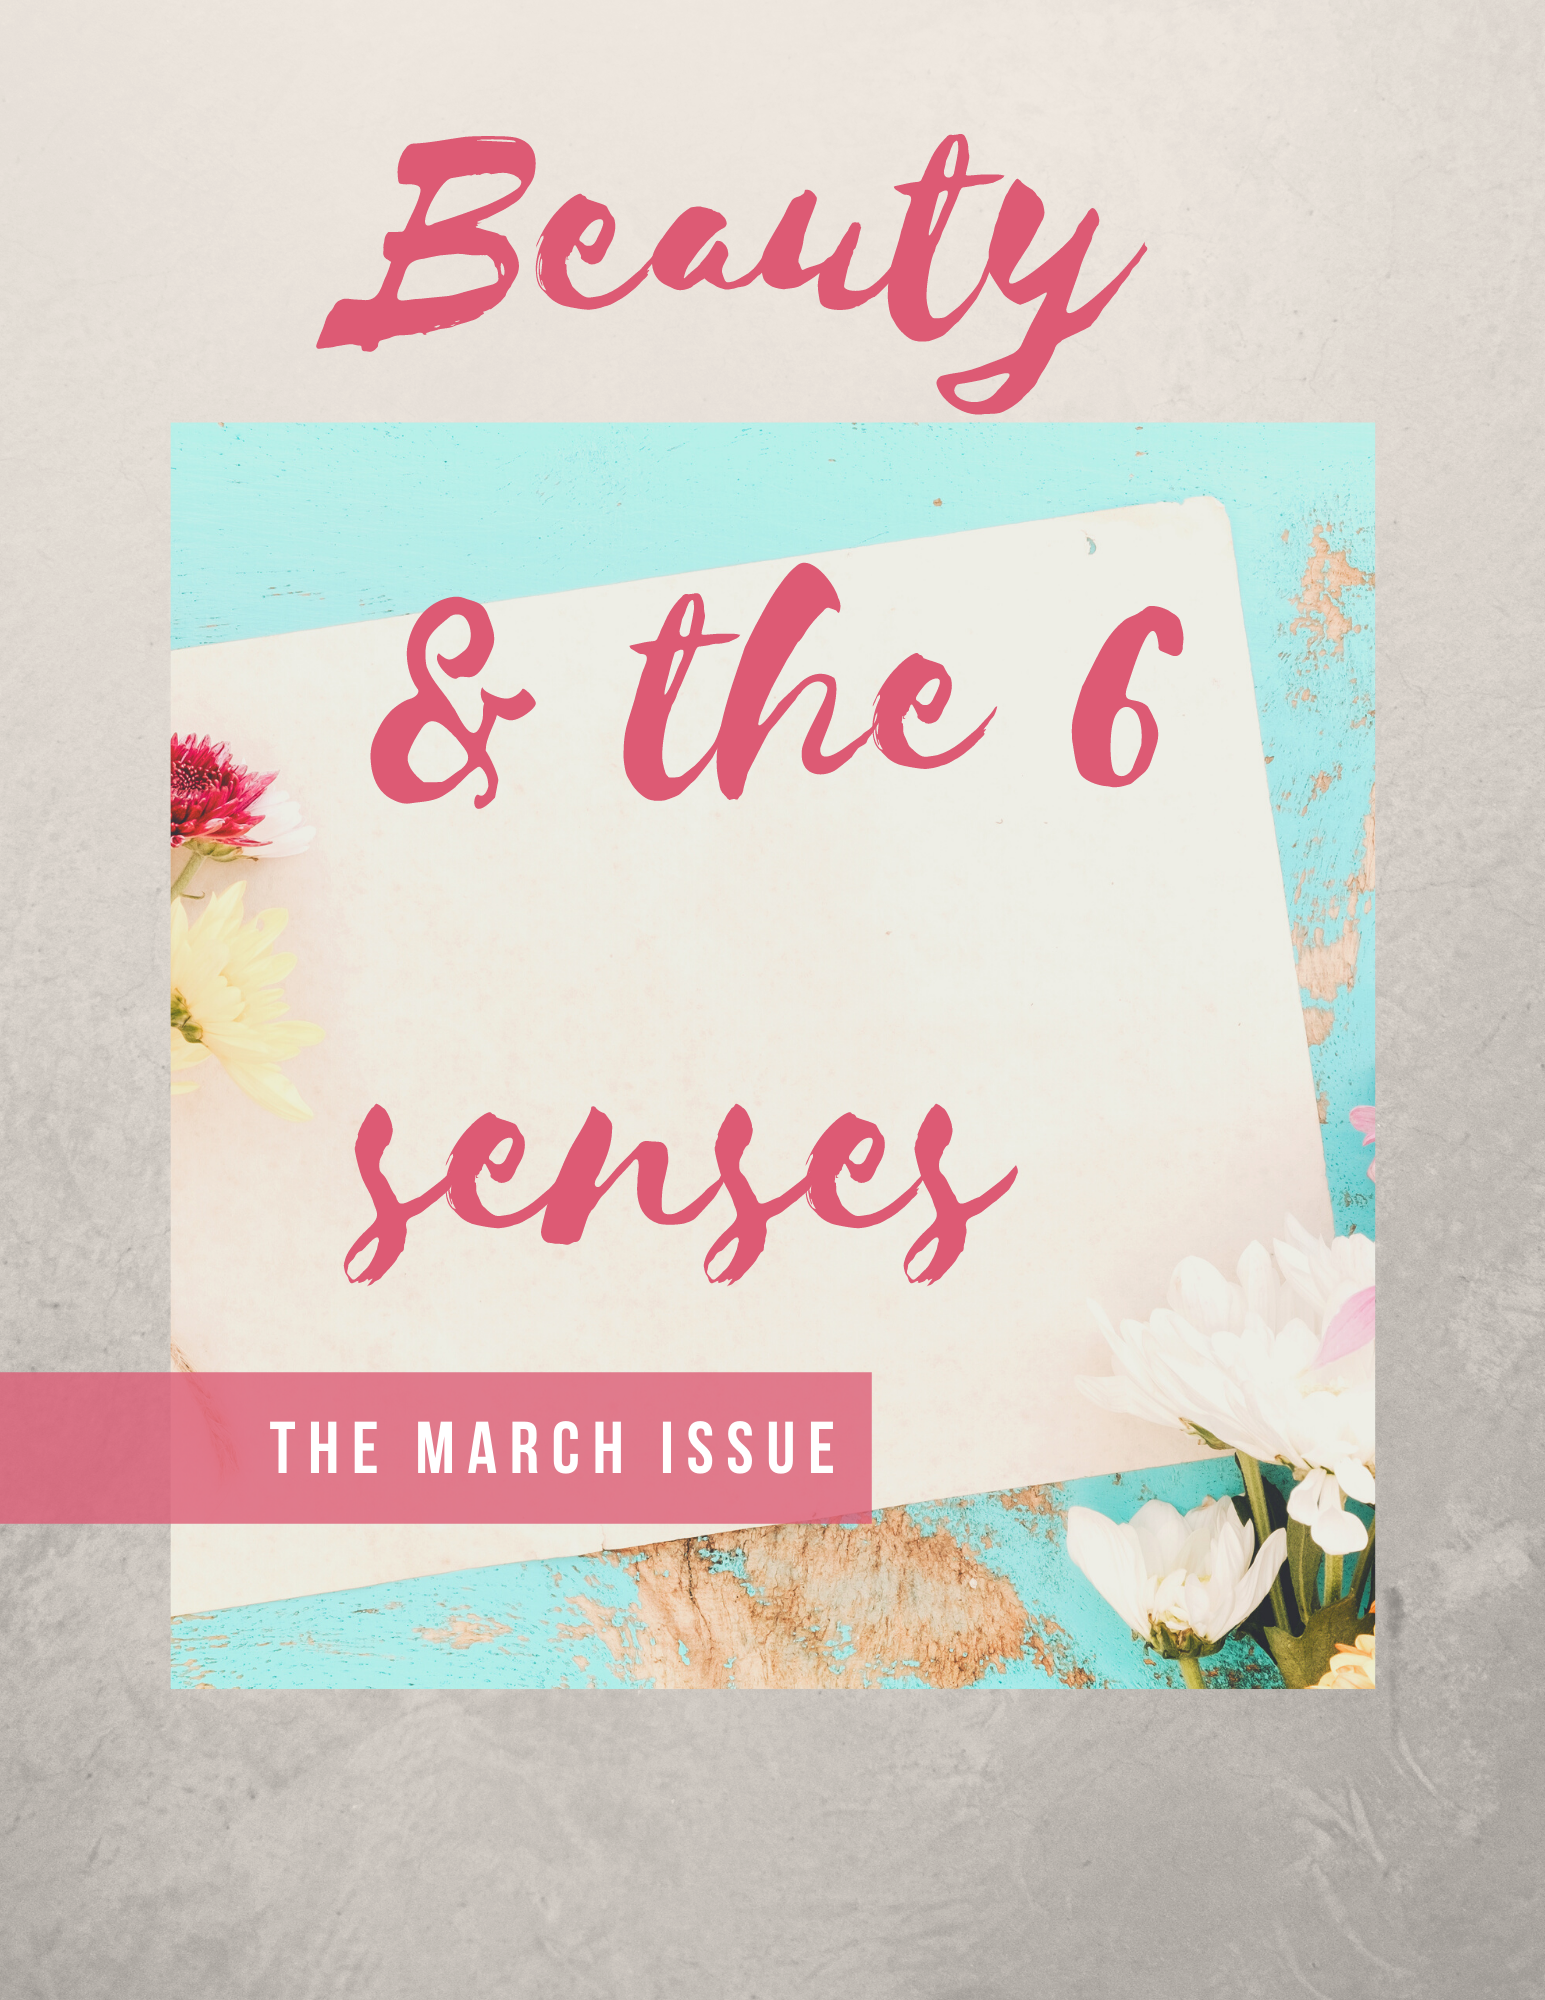 Words: Beauty & The Six Senses